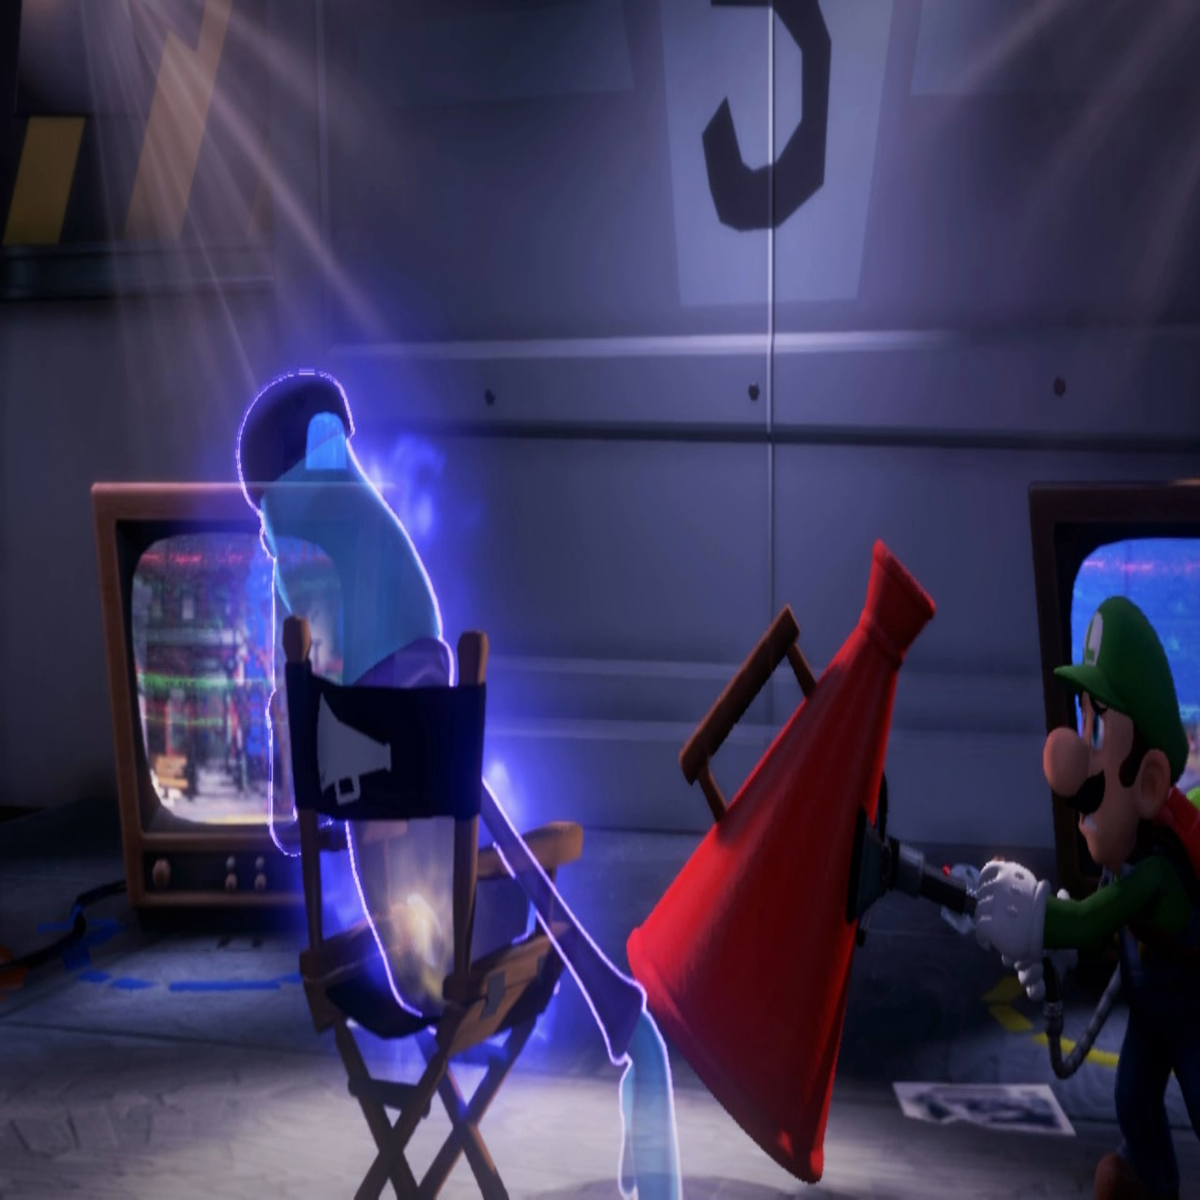 Luigi's Movie! 8F Paranormal Productions! - Luigi's Mansion 3 Gameplay  Walkthrough Part 8 